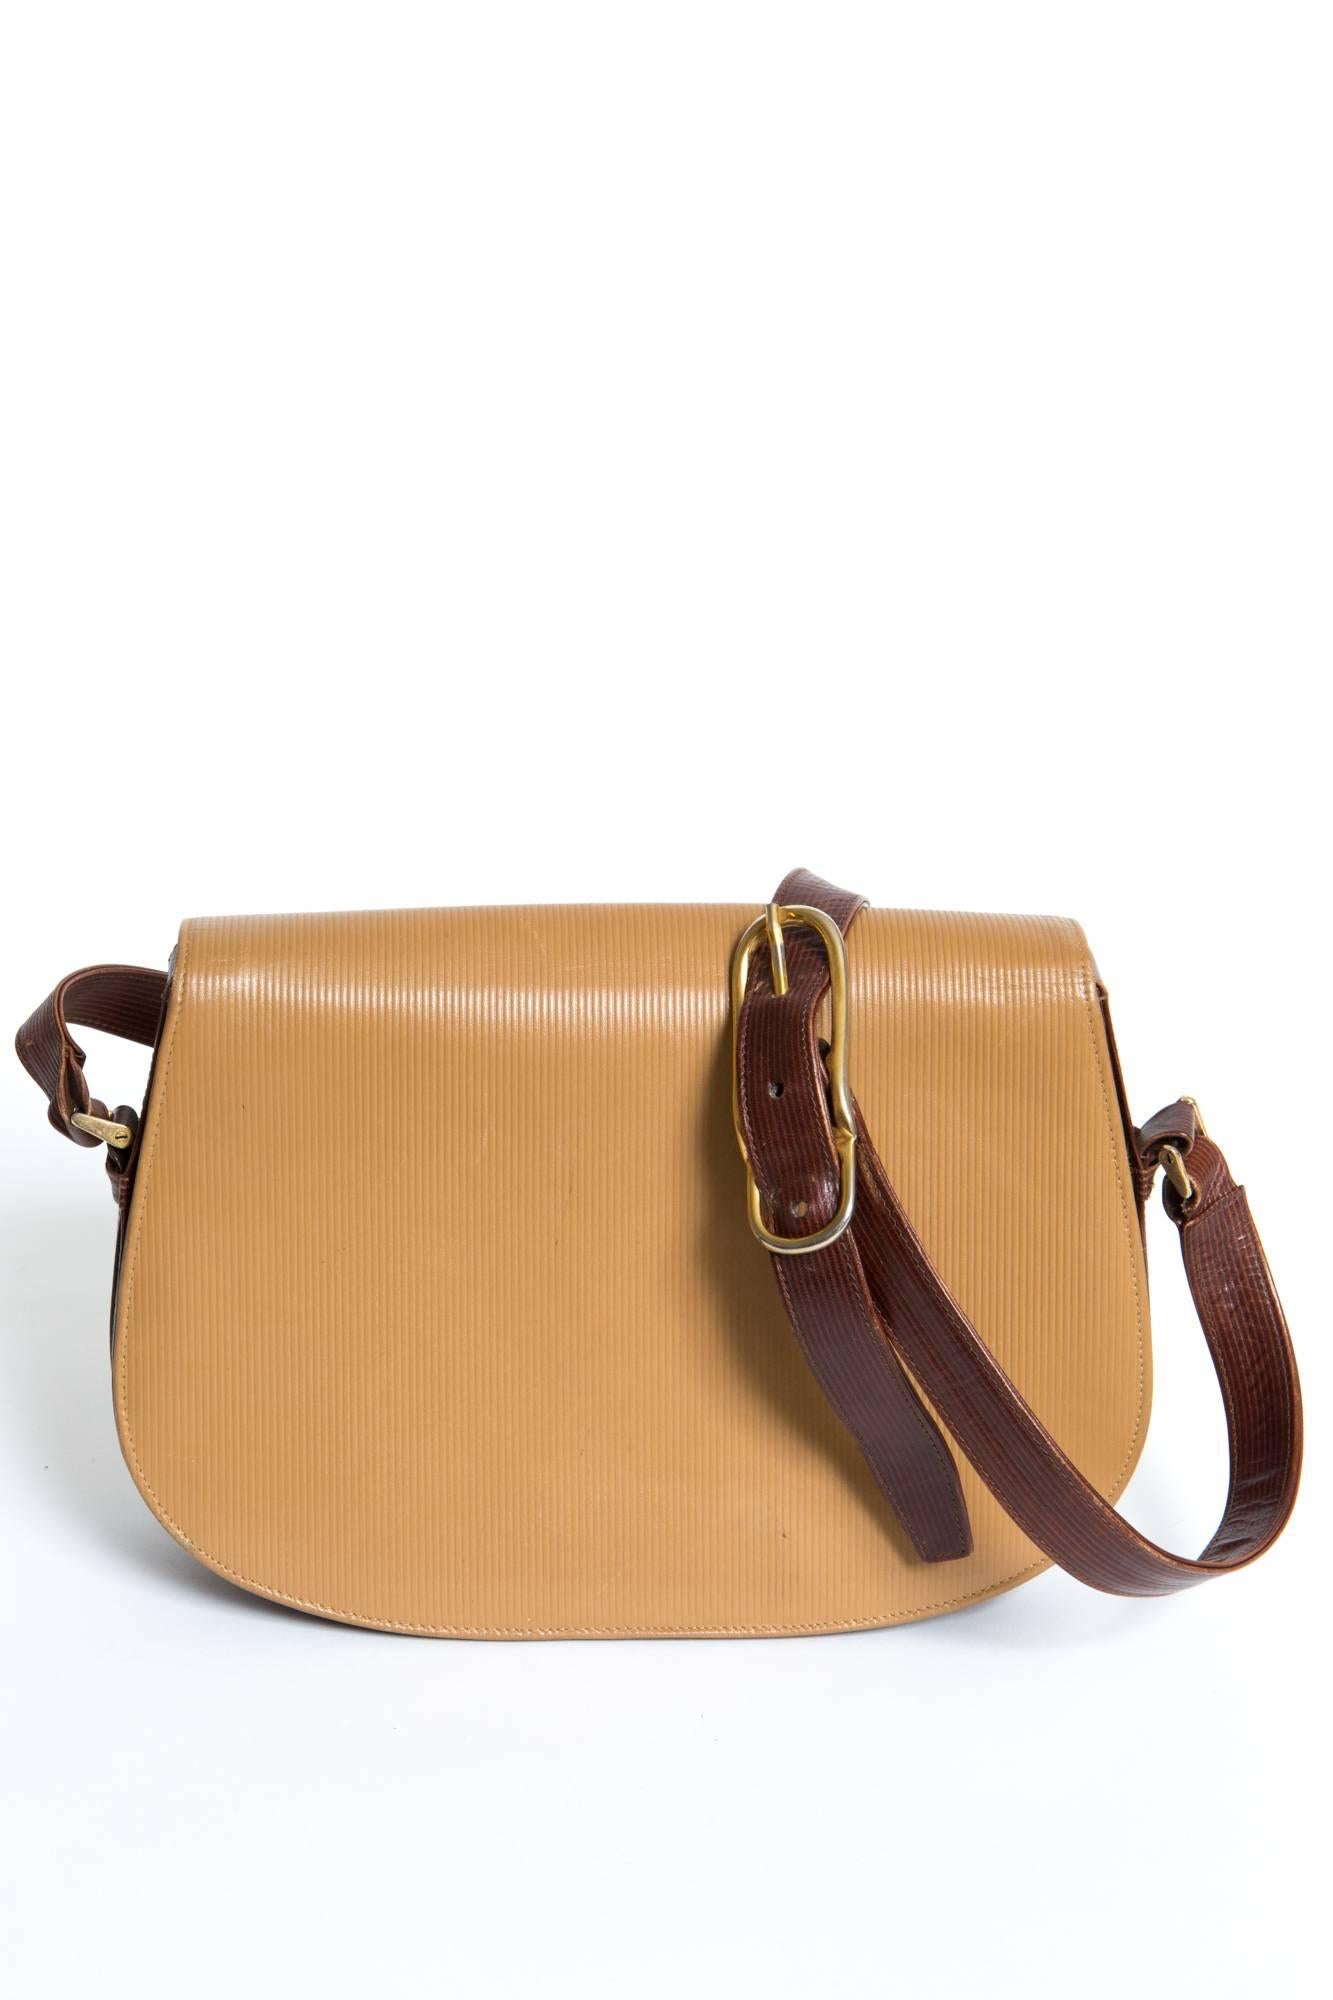 Brown Roberta Di Camerino Tricolor Textured Leather Shoulder Bag